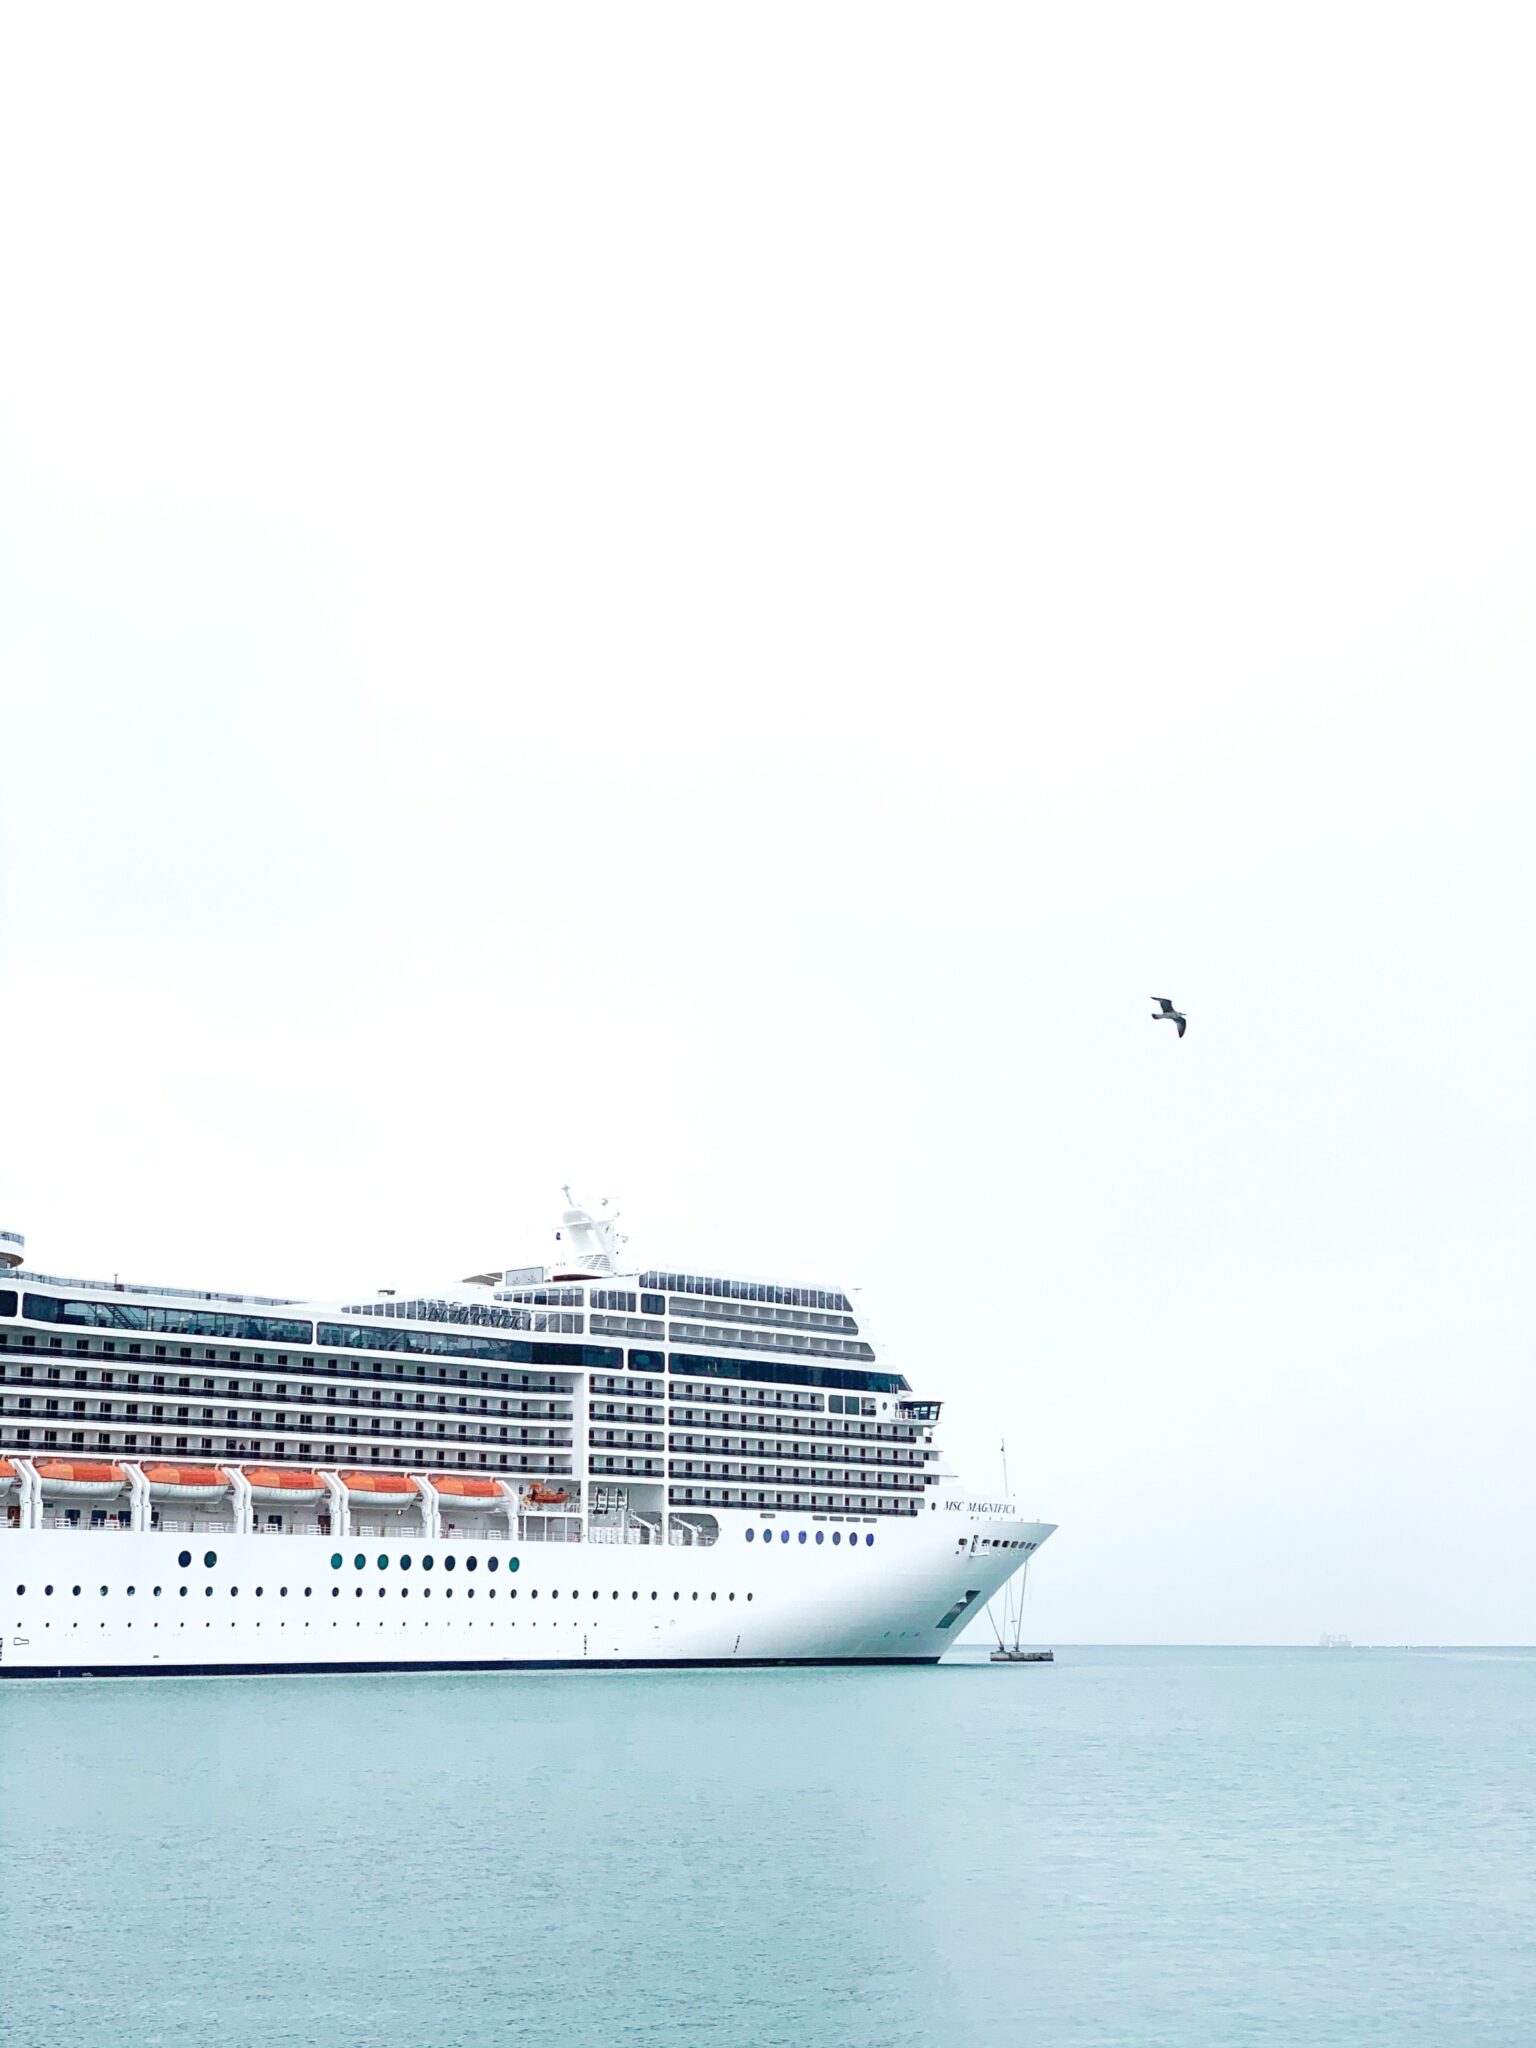 A cruise ship against a white sky, a bird flies high in the sky.